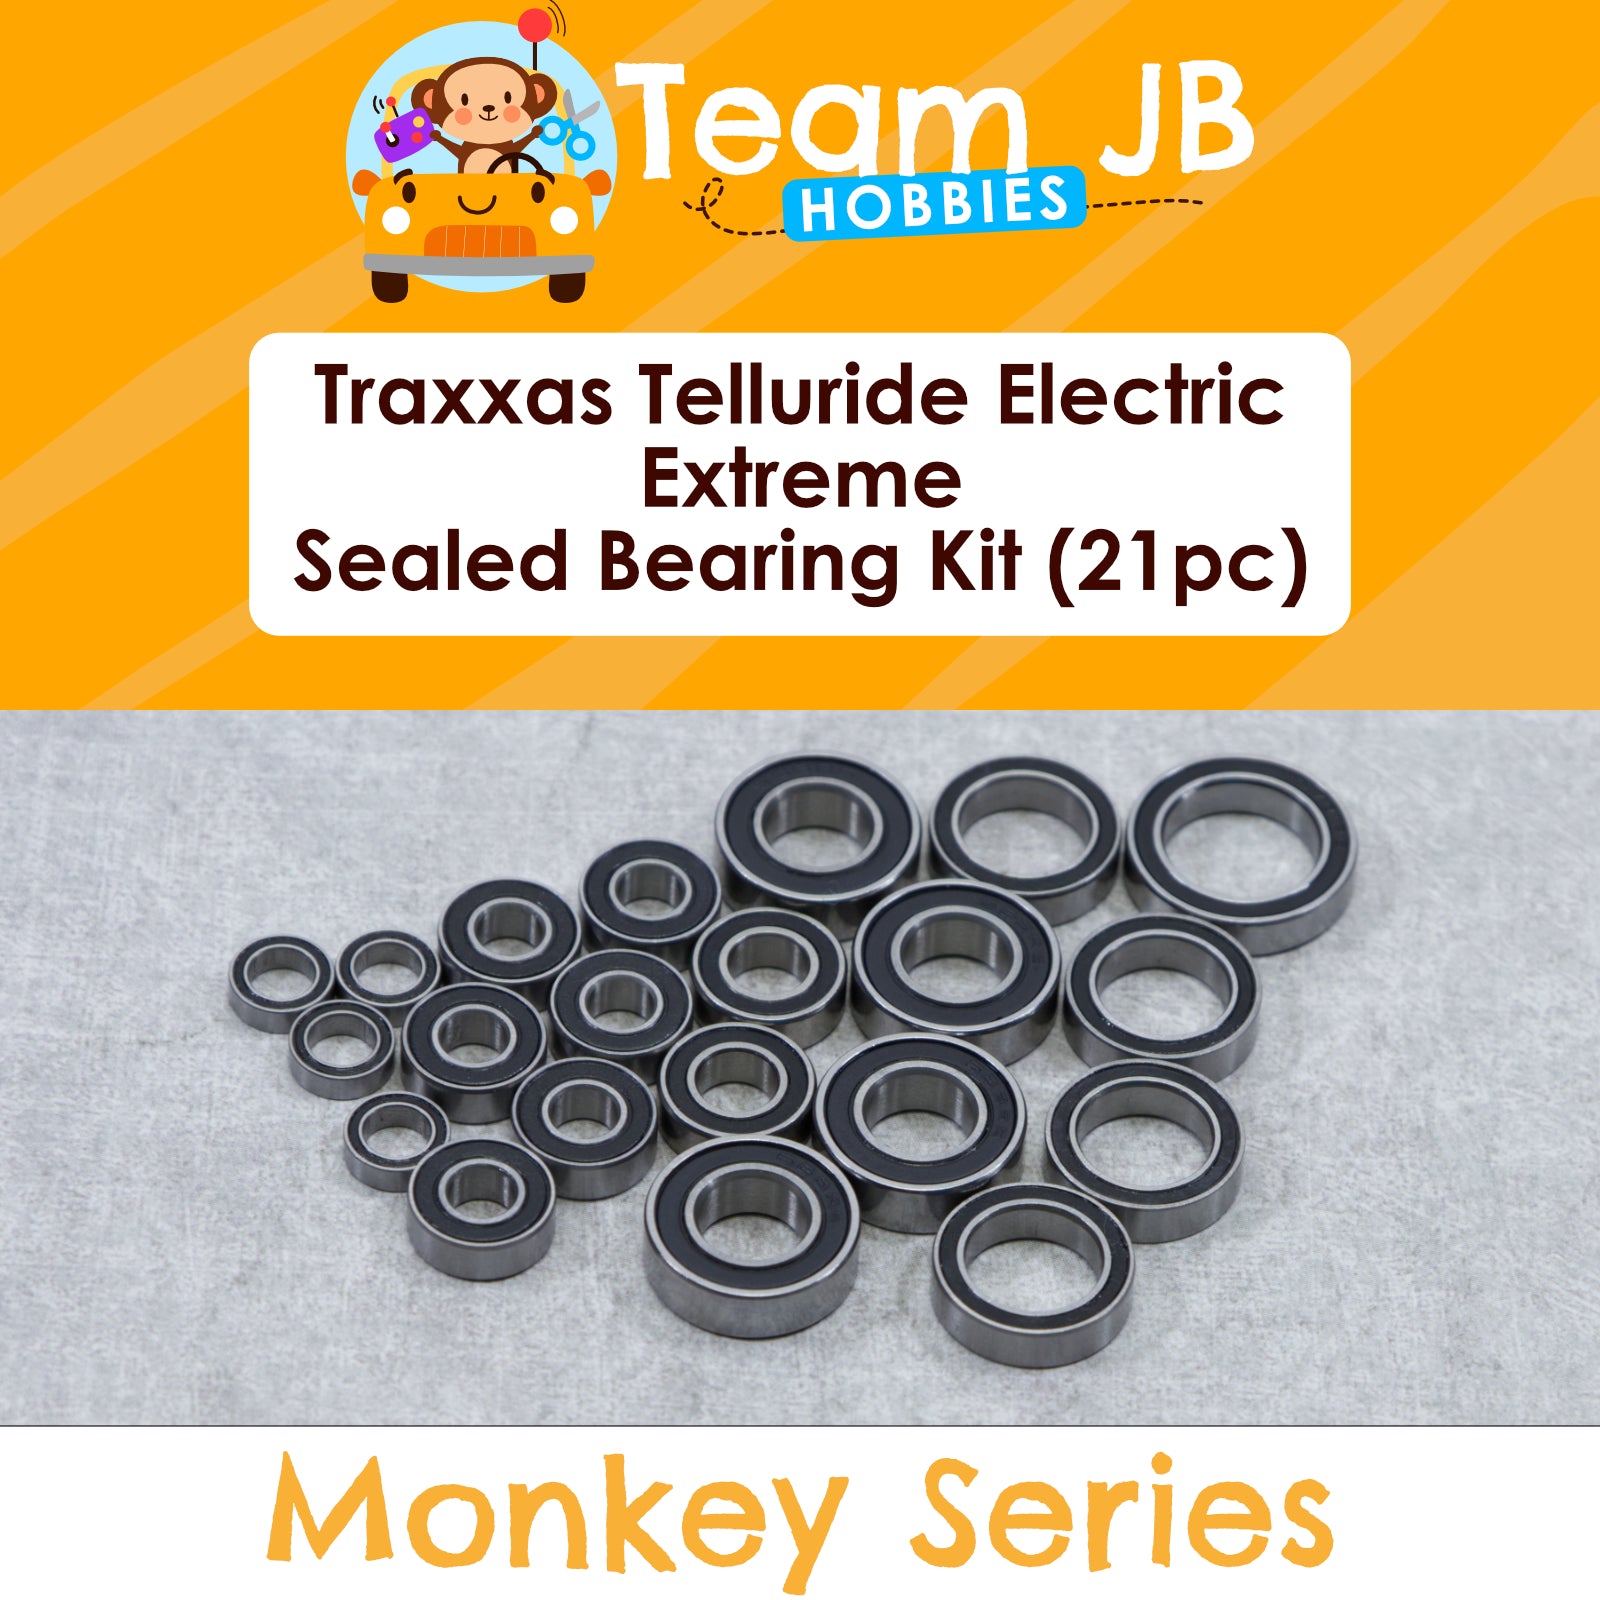 Traxxas Telluride Electric Extreme - Sealed Bearing Kit